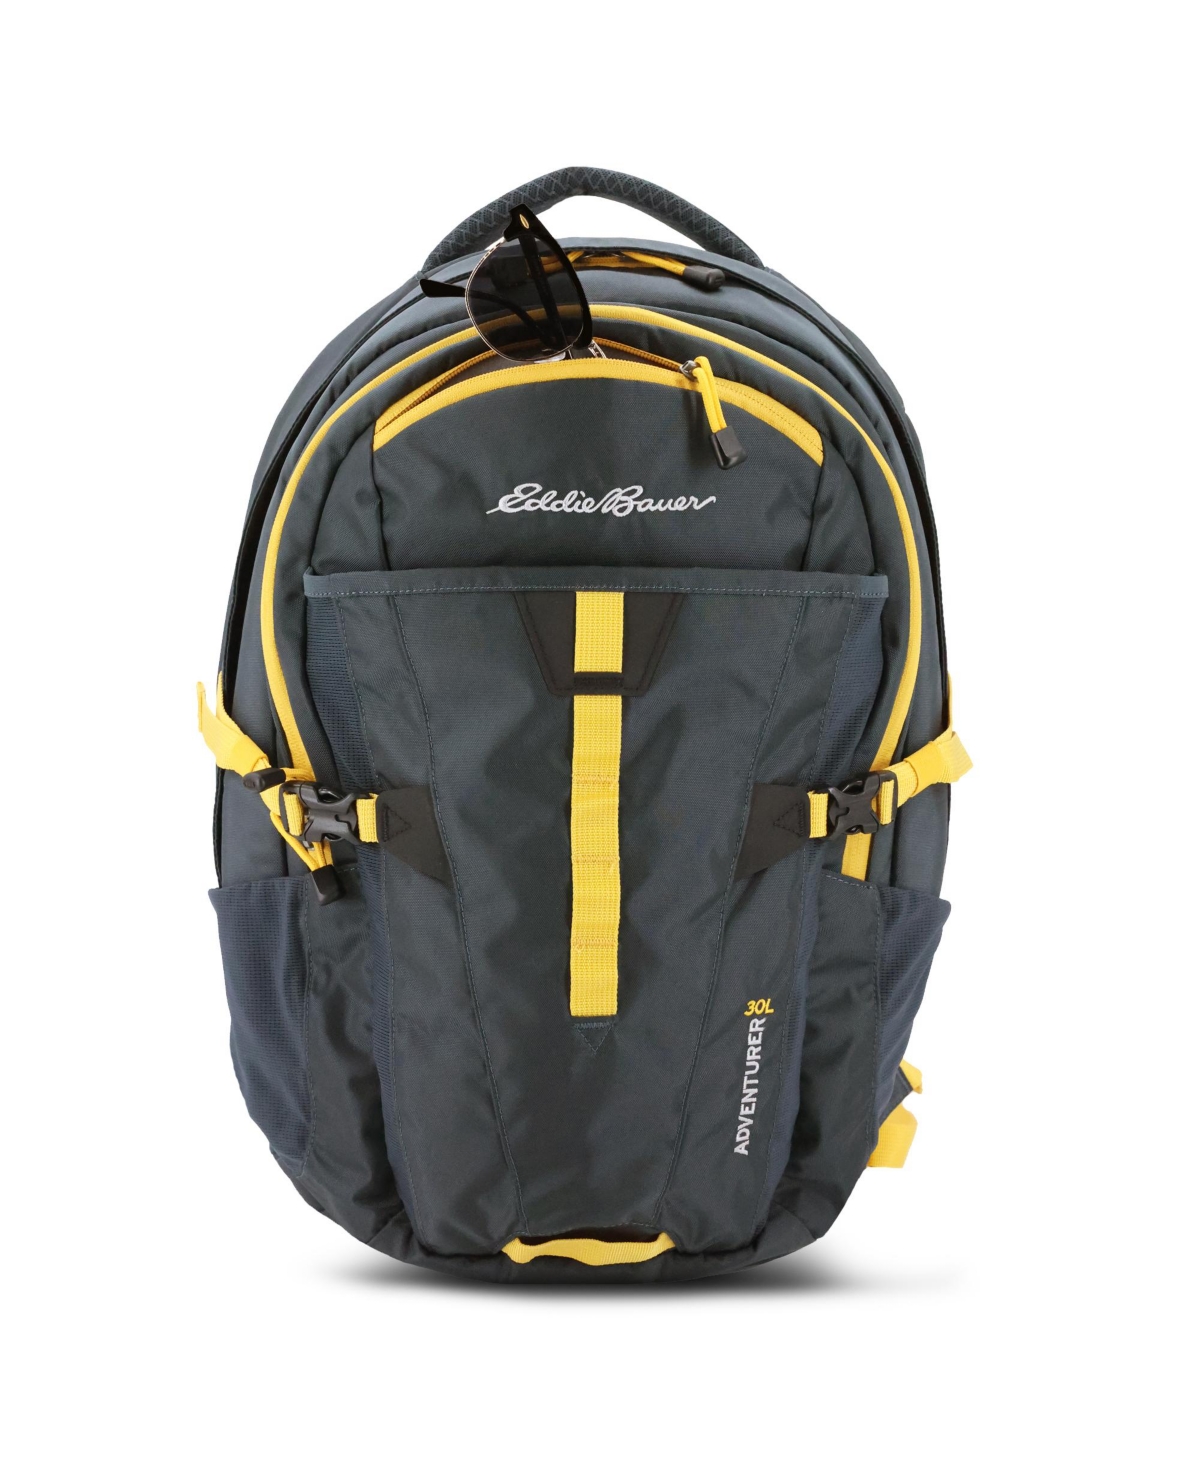 Adventurer 30 Liters Backpack - Picante